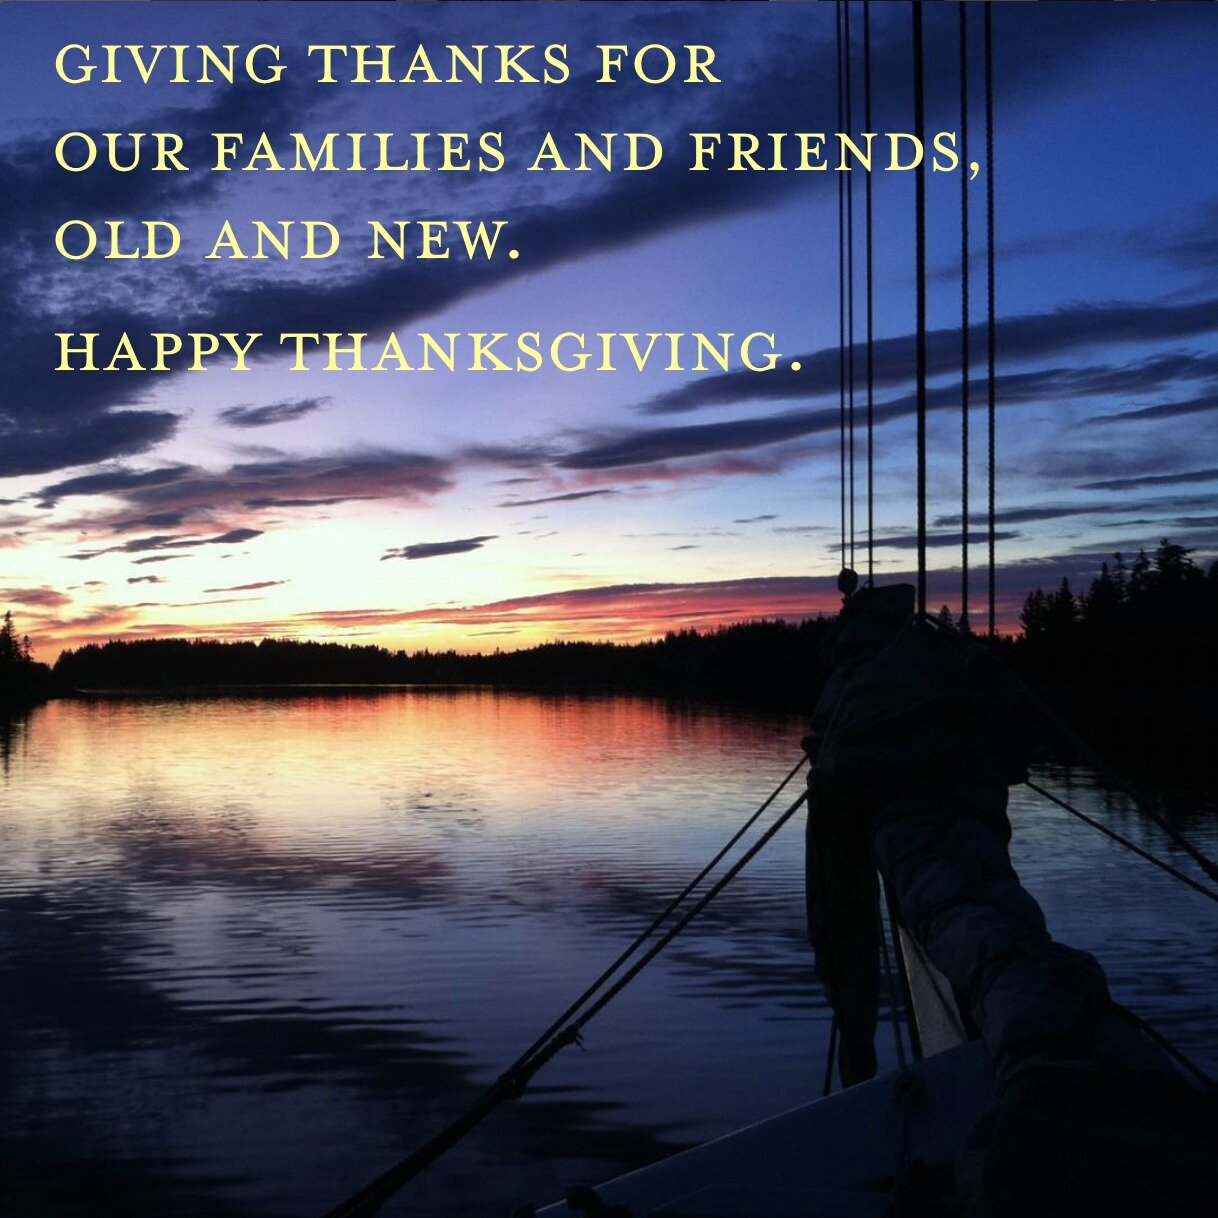 #thanksgiving2023 
#givingthanks 
#SchoonerLadona
#ThisIsWindJamming
#MaineLife
#MaineWinjammerAssociation
#SailPenobscotBay